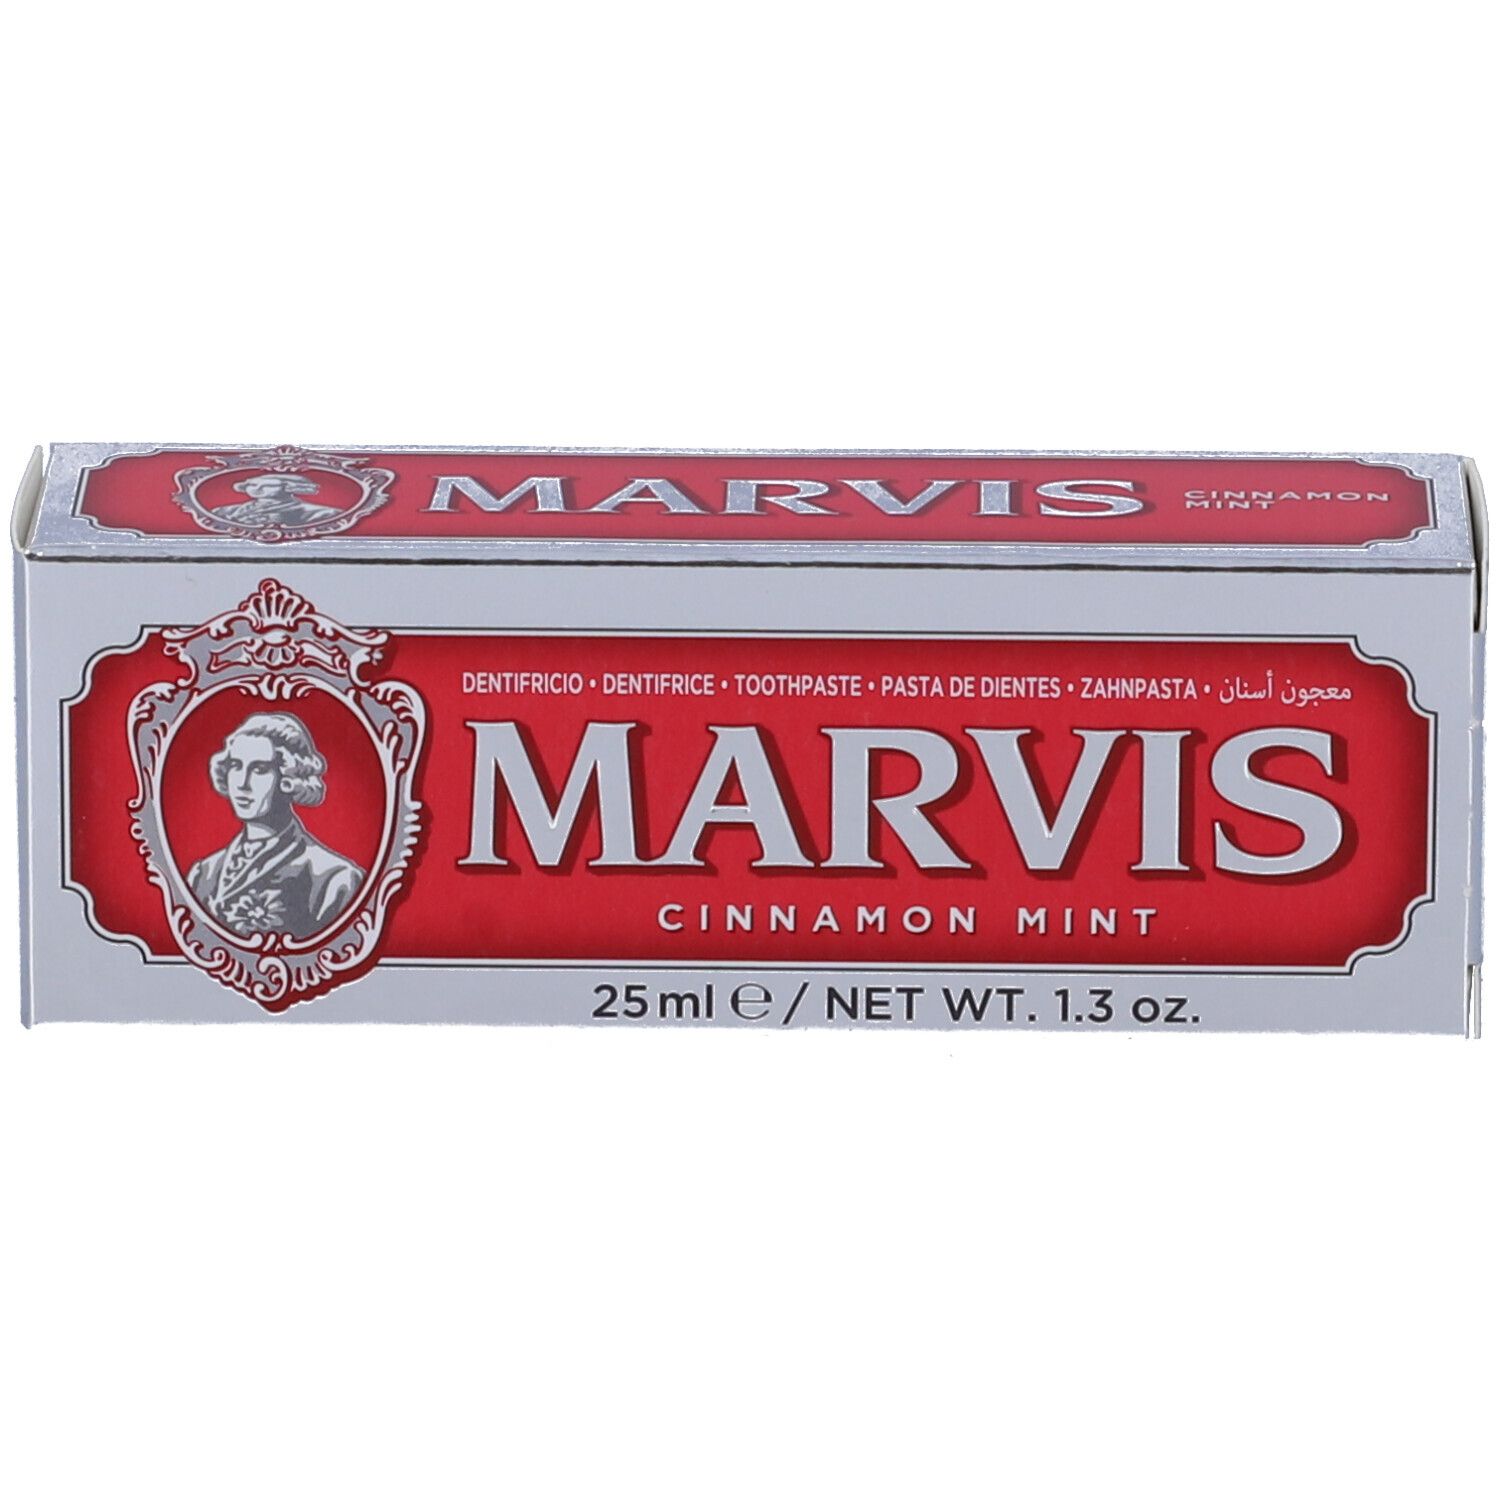 Marvis Cinnamon Mint Dentifricio